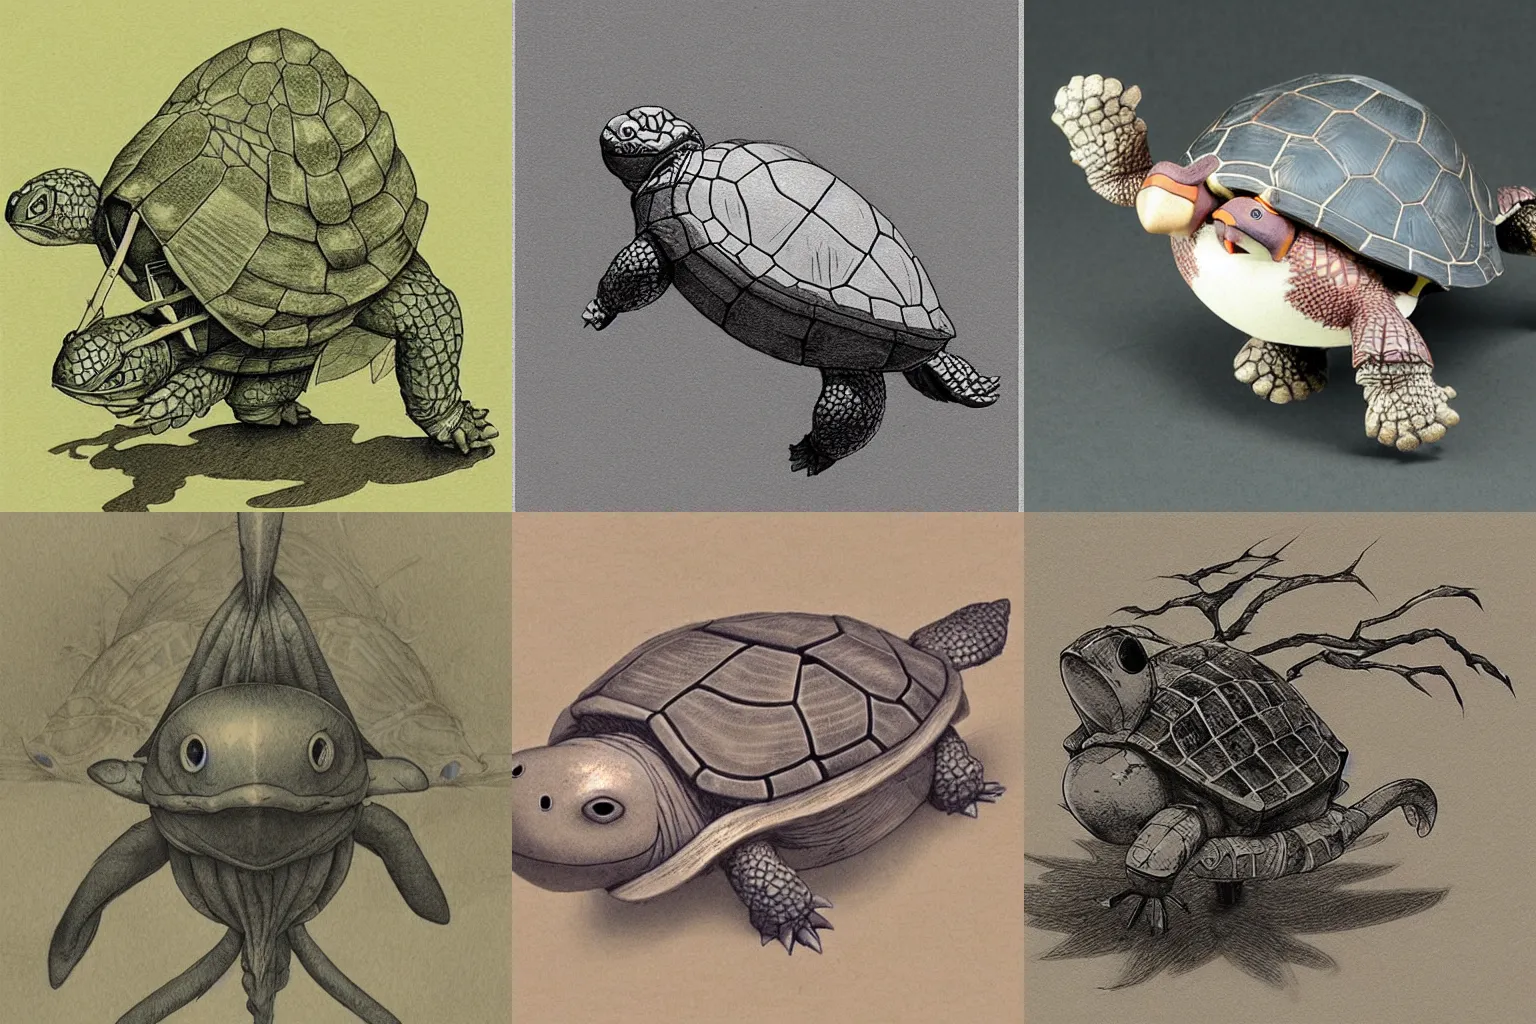 Prompt: tengu turtle by Yoshitaka Amano, style of John Kenn Mortensen